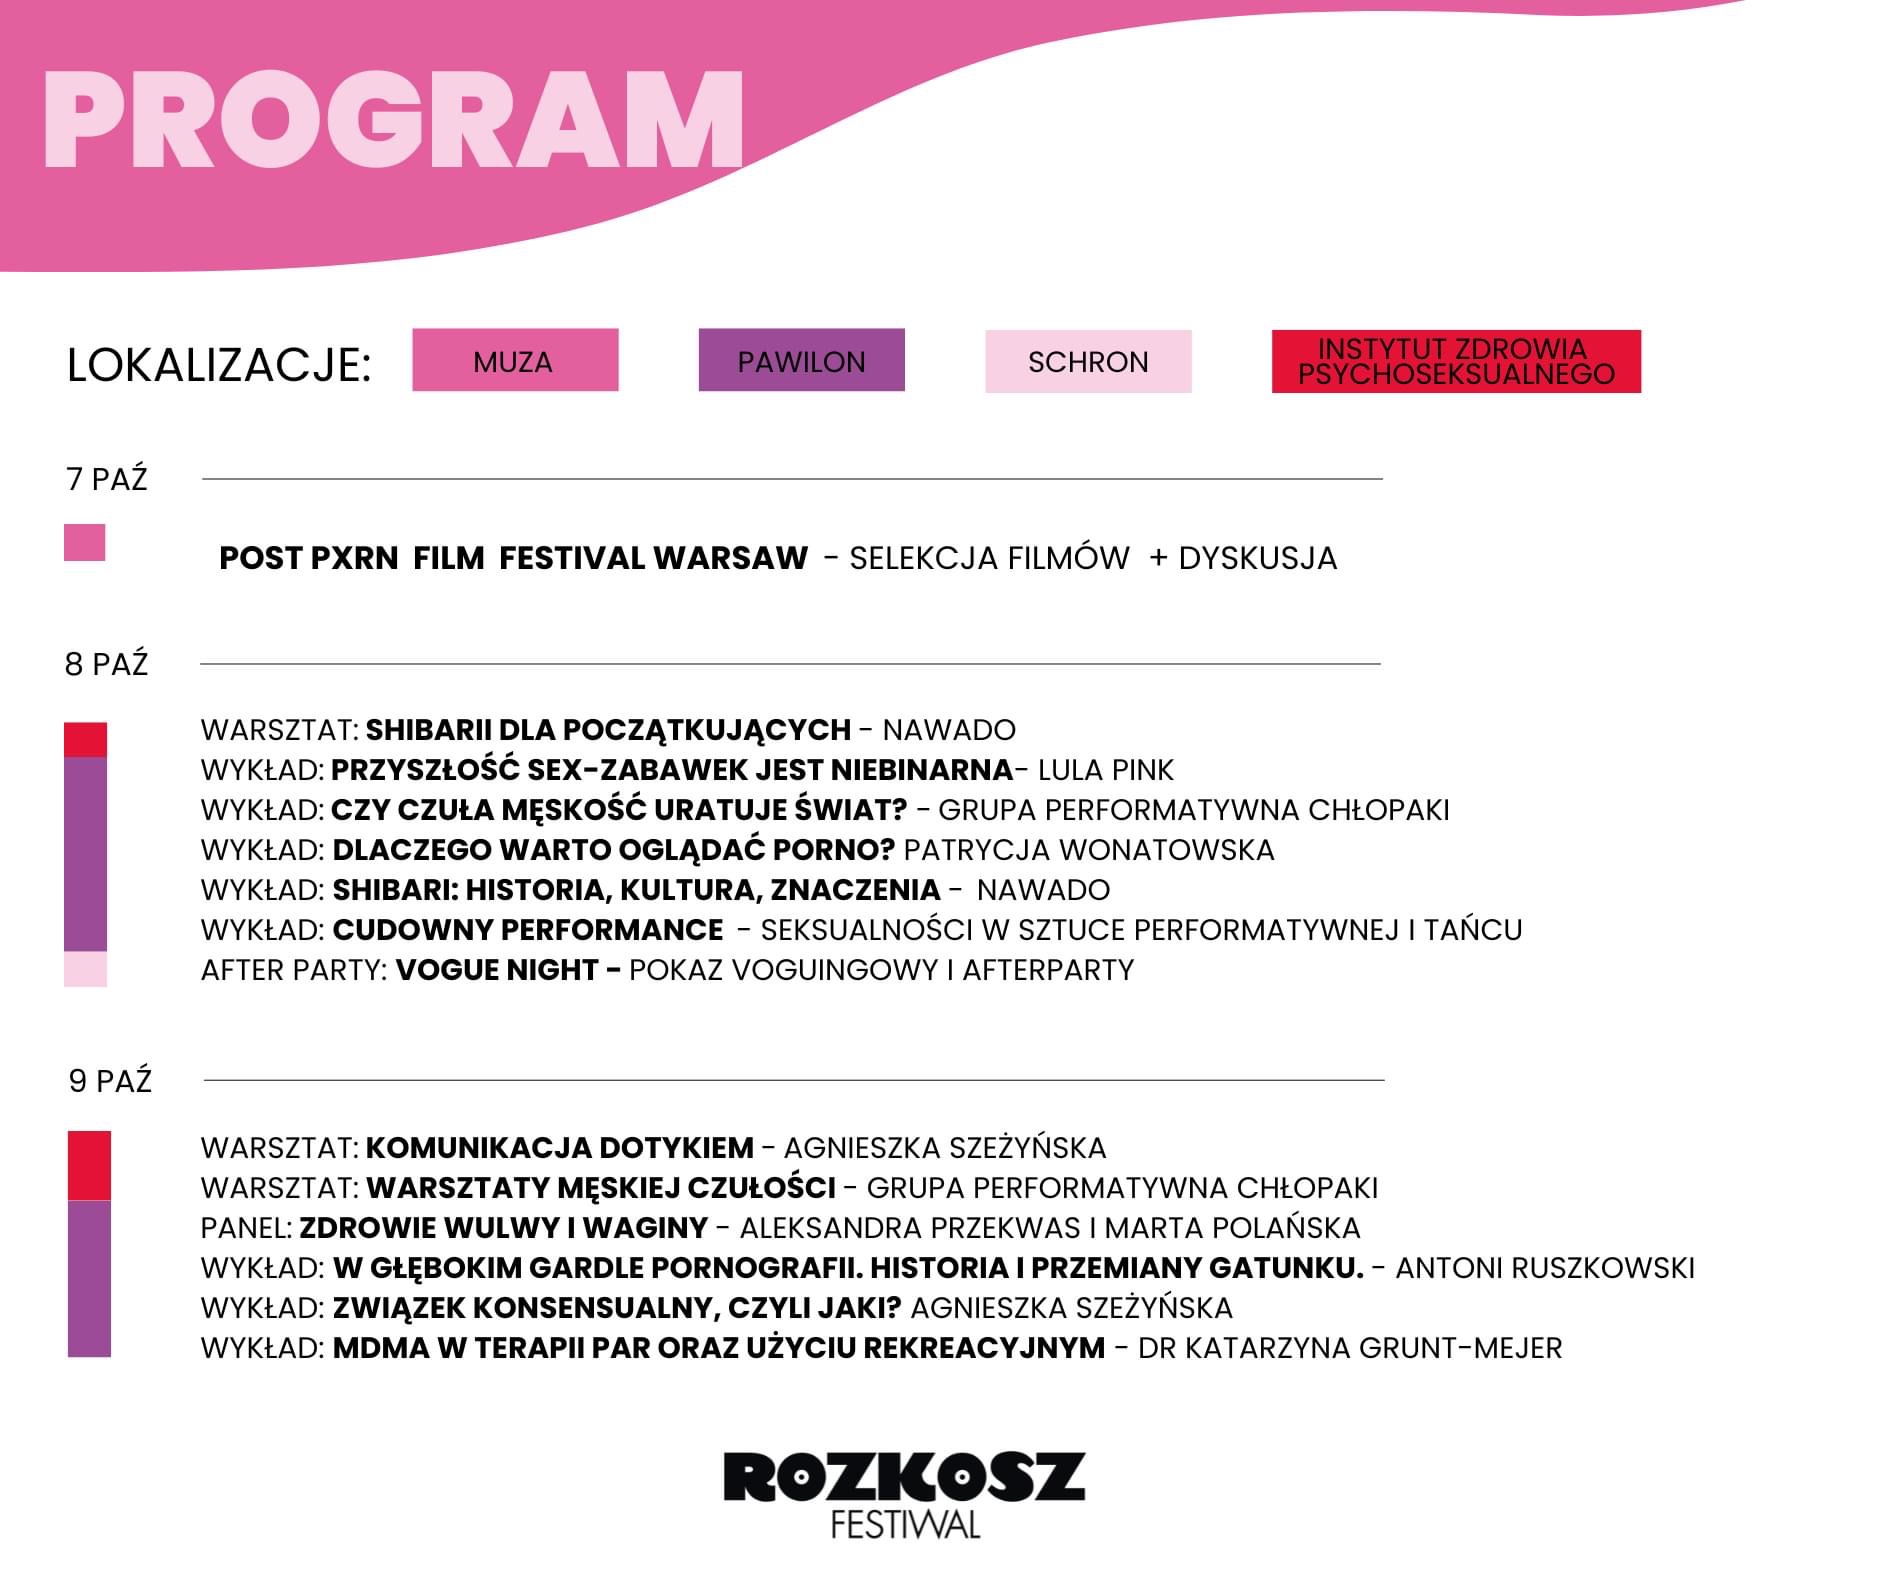 Rozkosz Festiwal